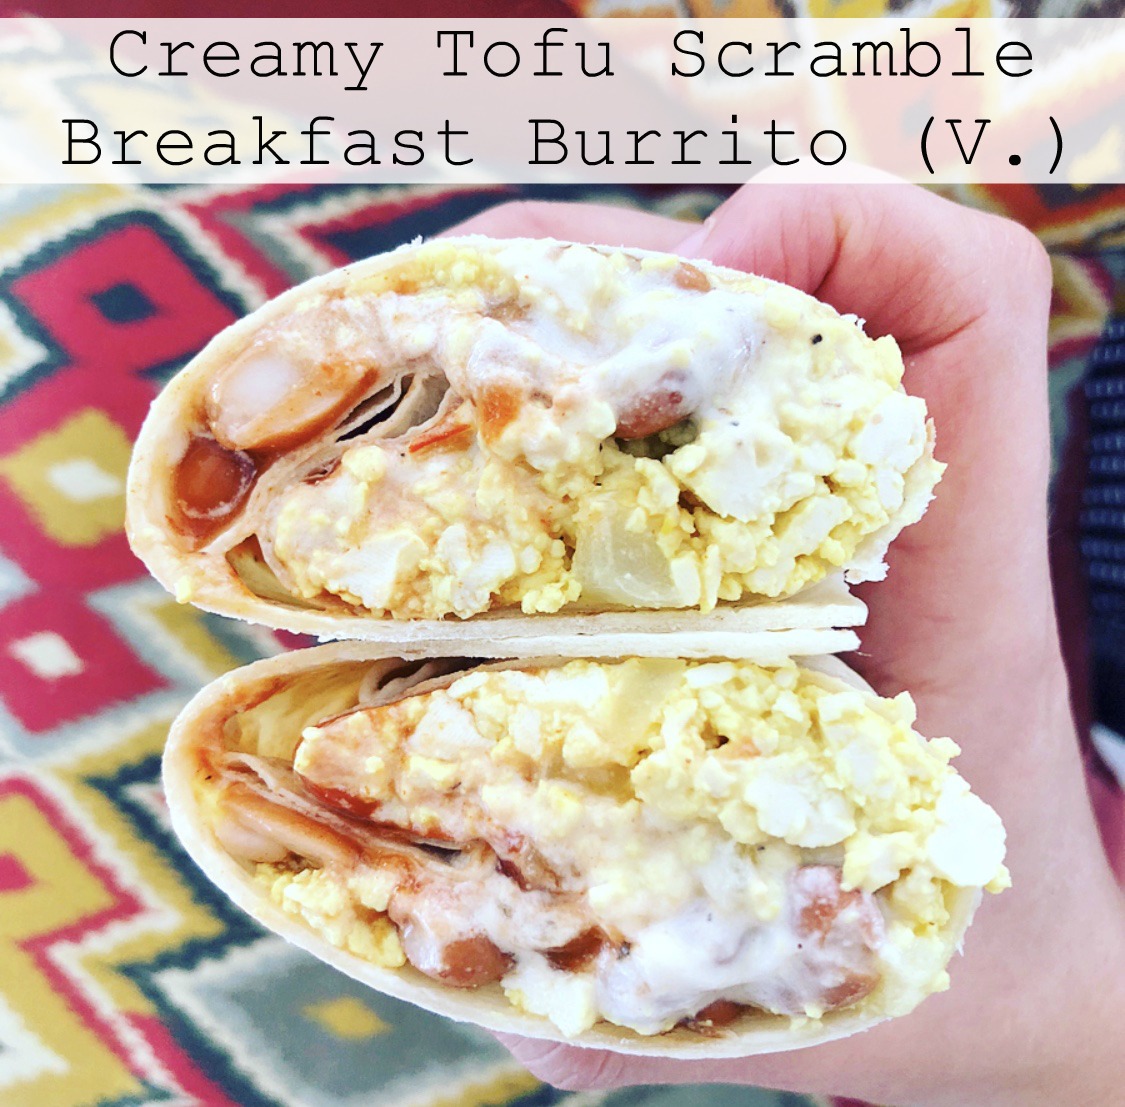 Creamy Tofu Scramble Breakfast Burrito